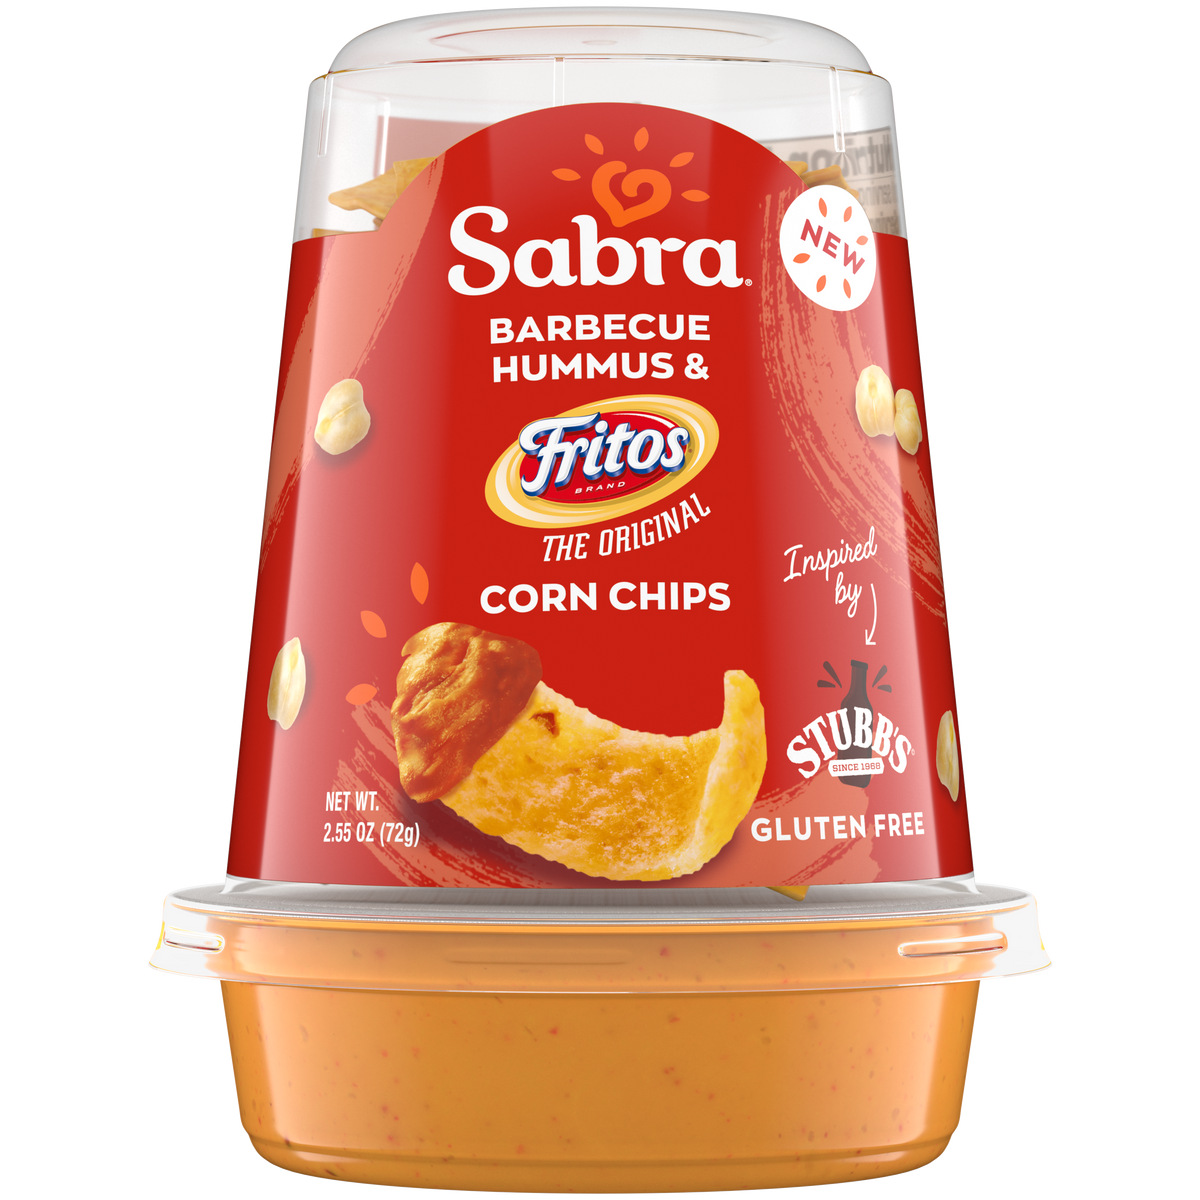 Sabra Snackers Barbecue Hummus Dip & Fritos The Original Corn Chips - 2.55 Oz